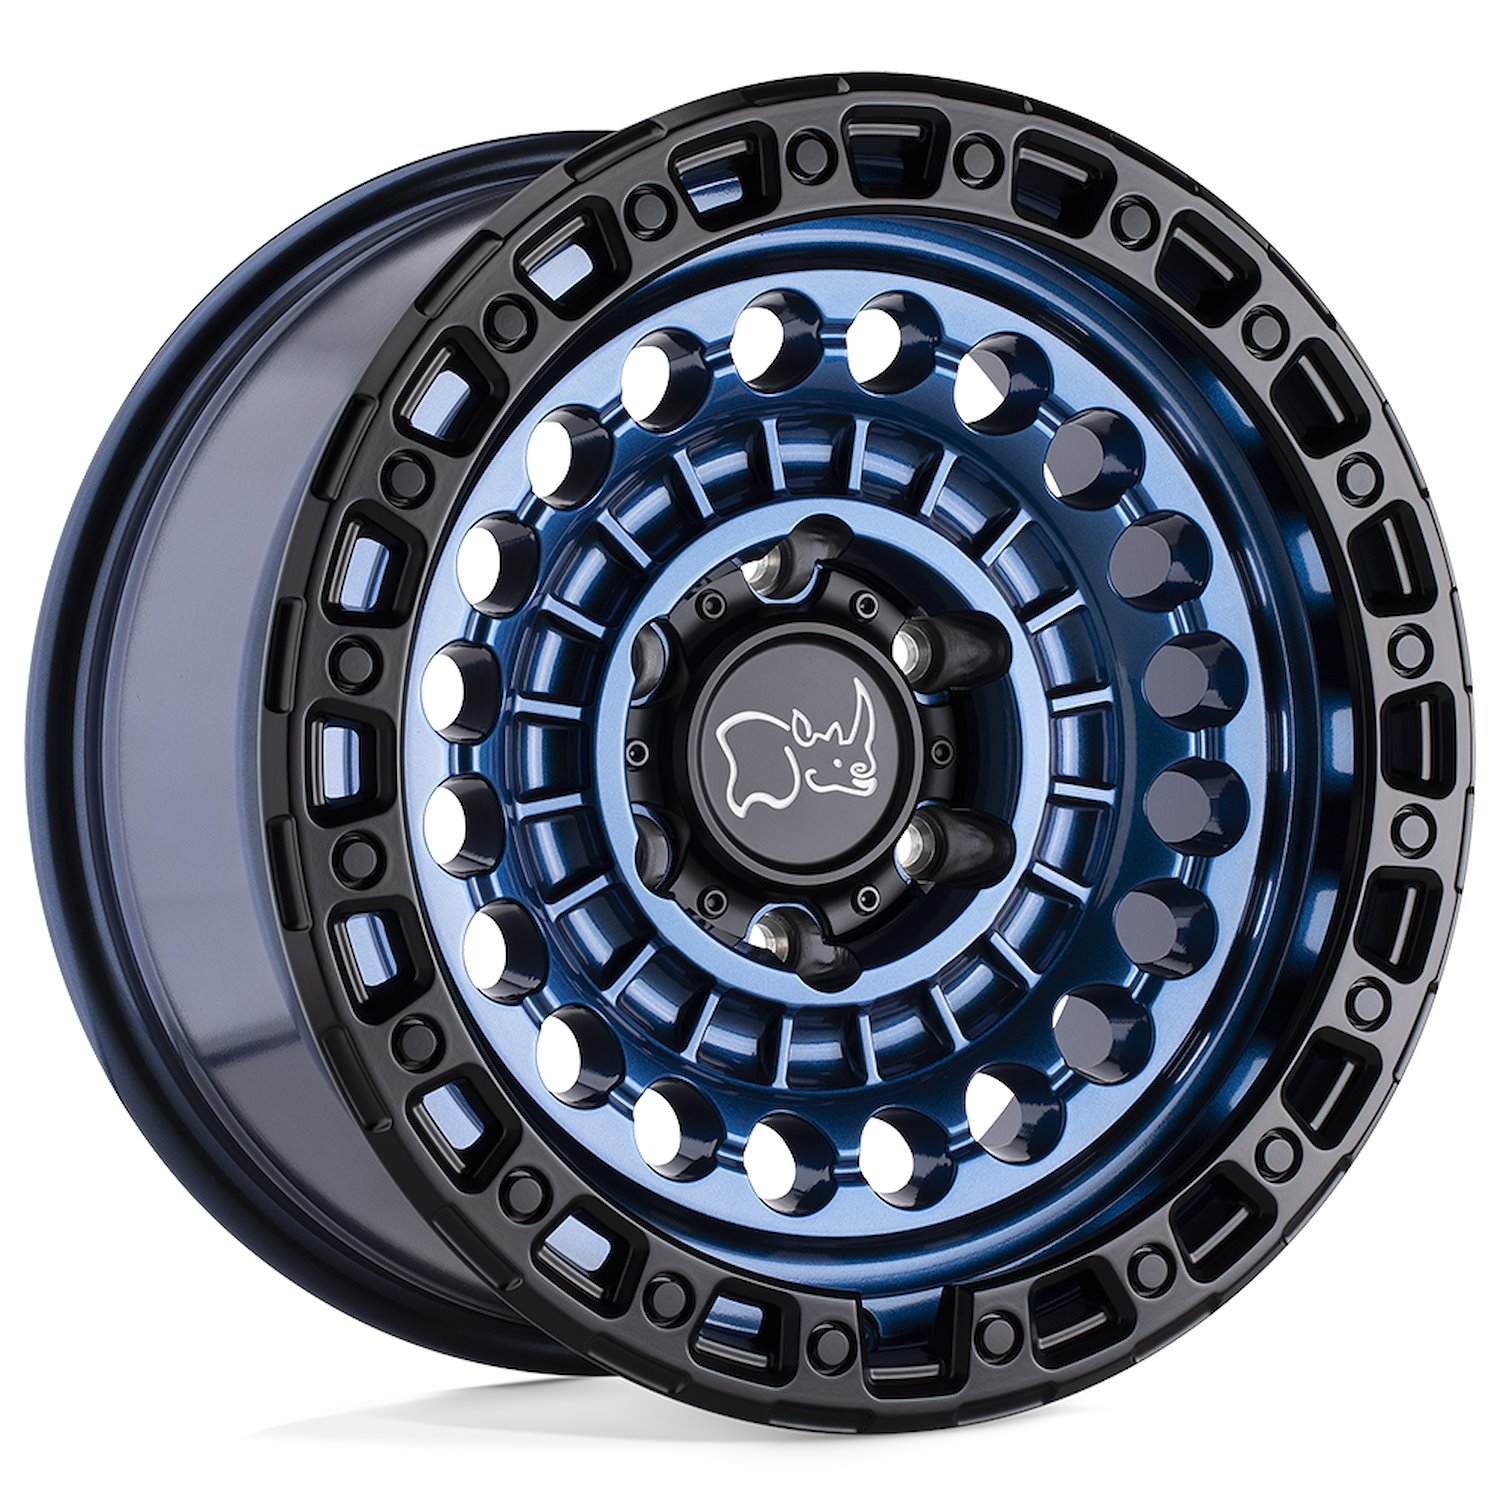 1785STN008180U24 SENTINEL Wheel [Size: 17" x 8.50"] Cobalt Blue w/Black Ring